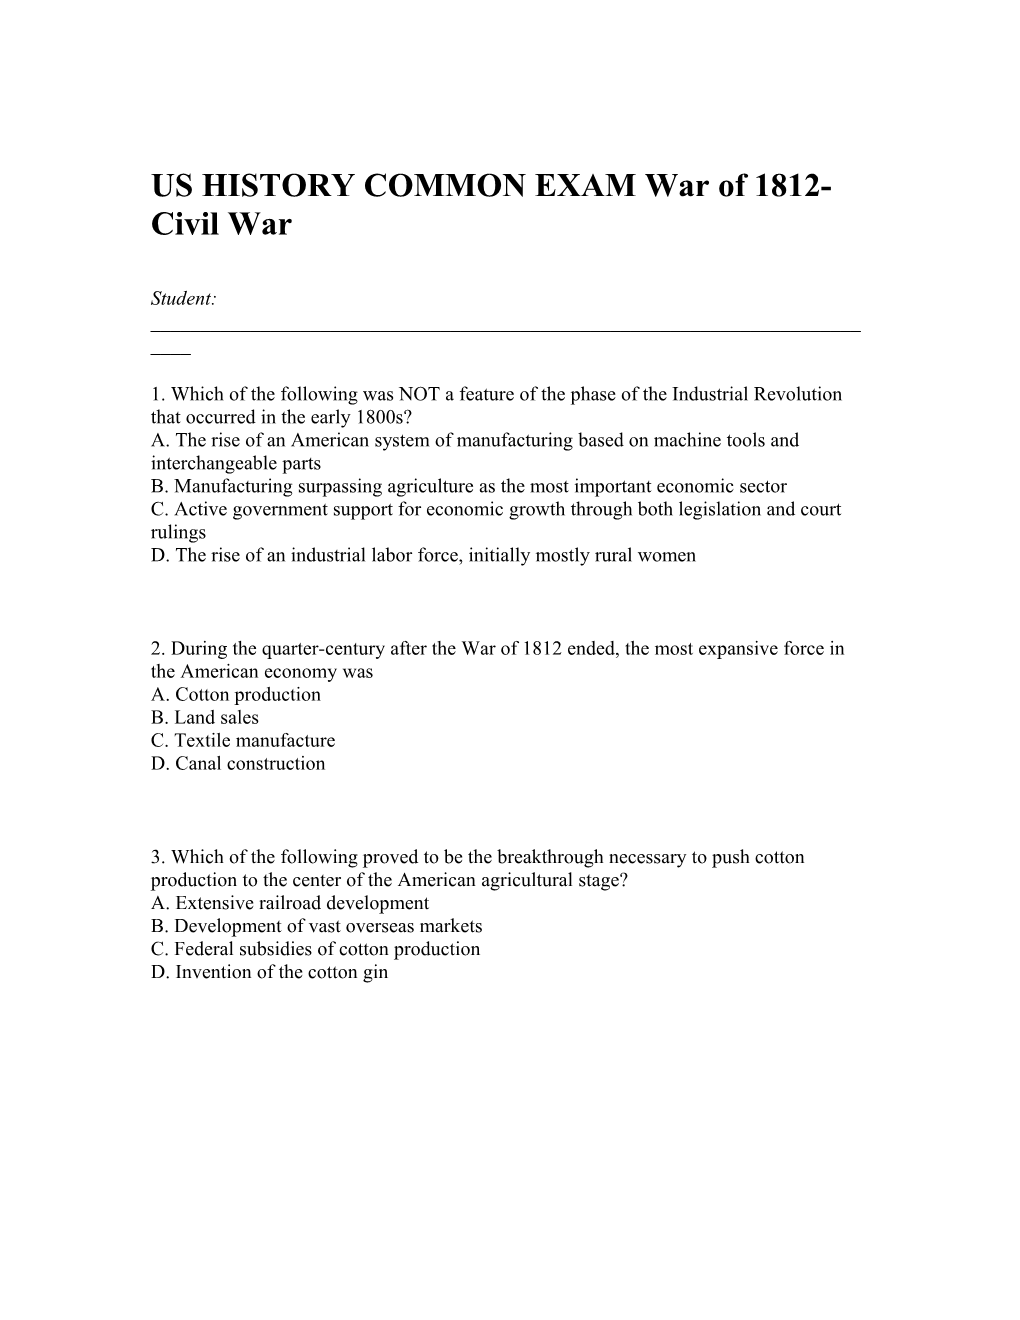 US HISTORY COMMON EXAM War Of 1812-Civil War